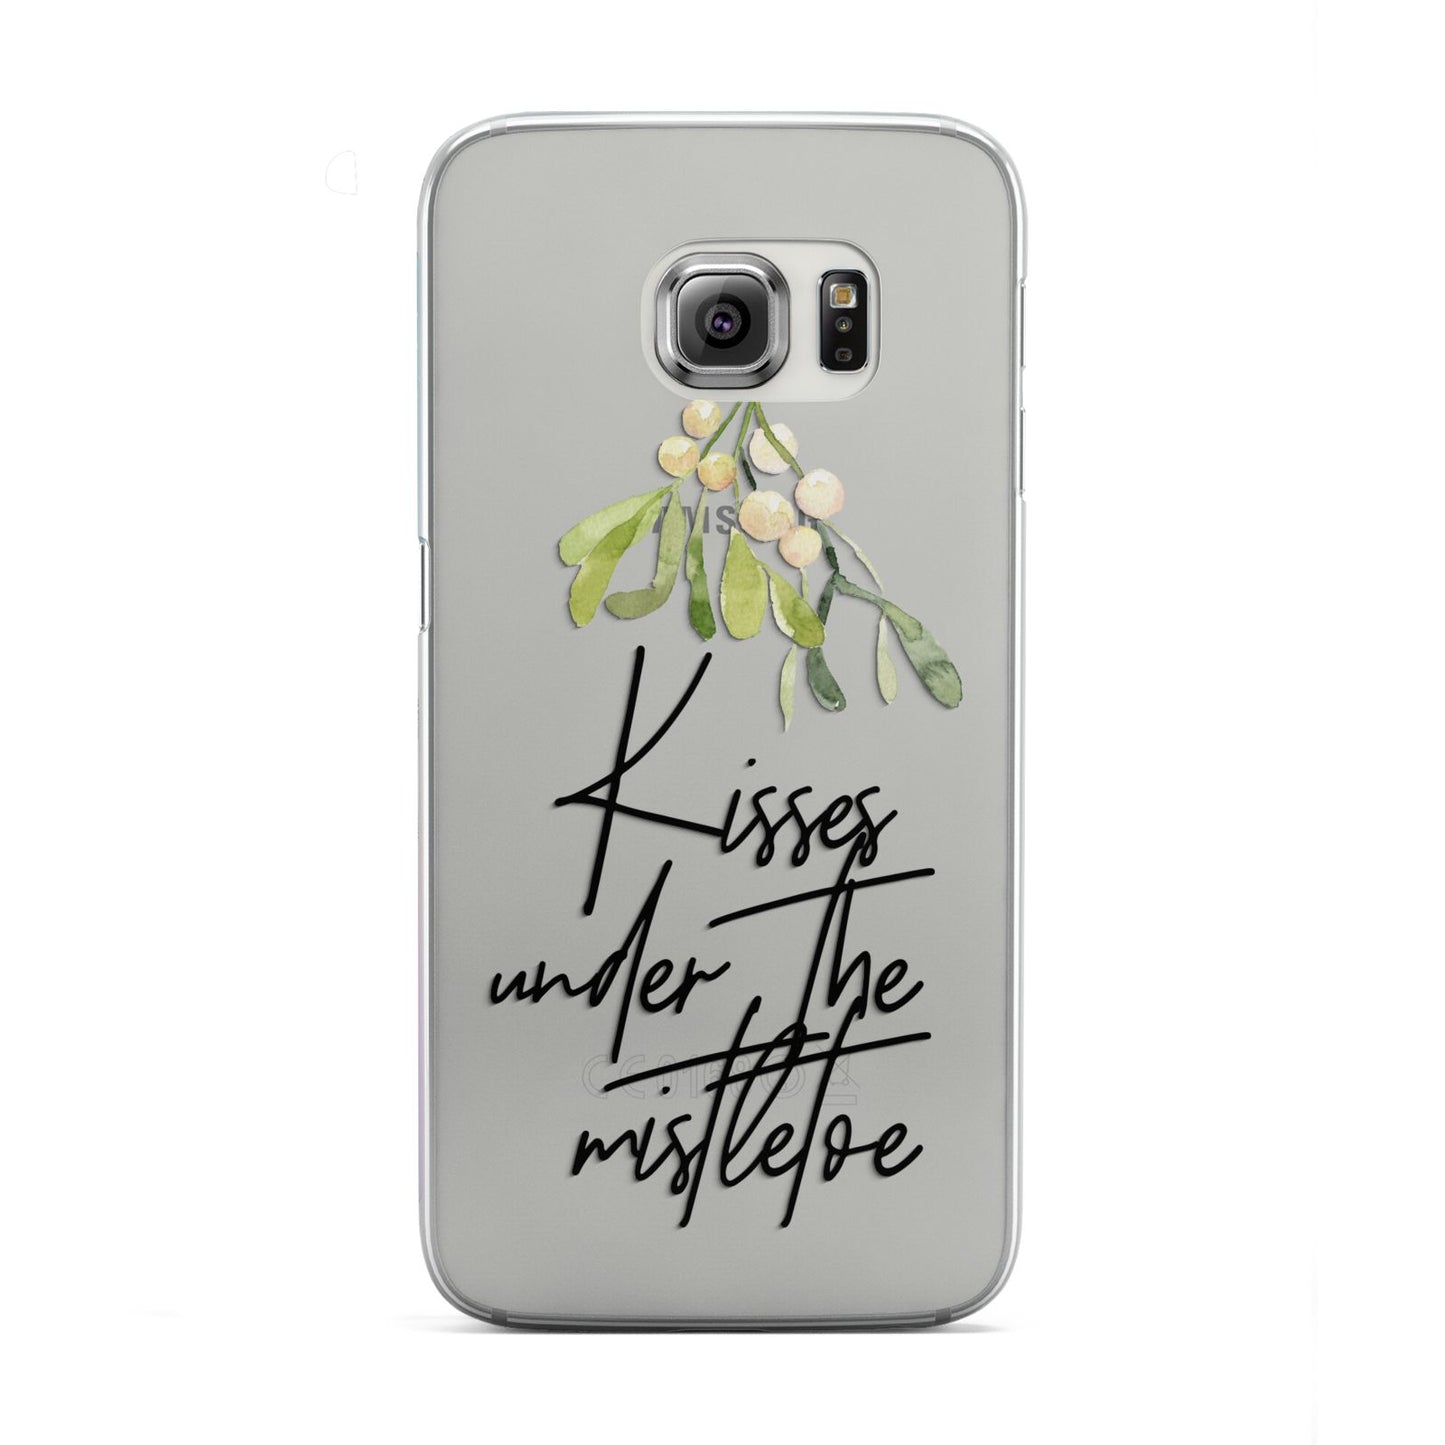 Kisses Under The Mistletoe Samsung Galaxy S6 Edge Case